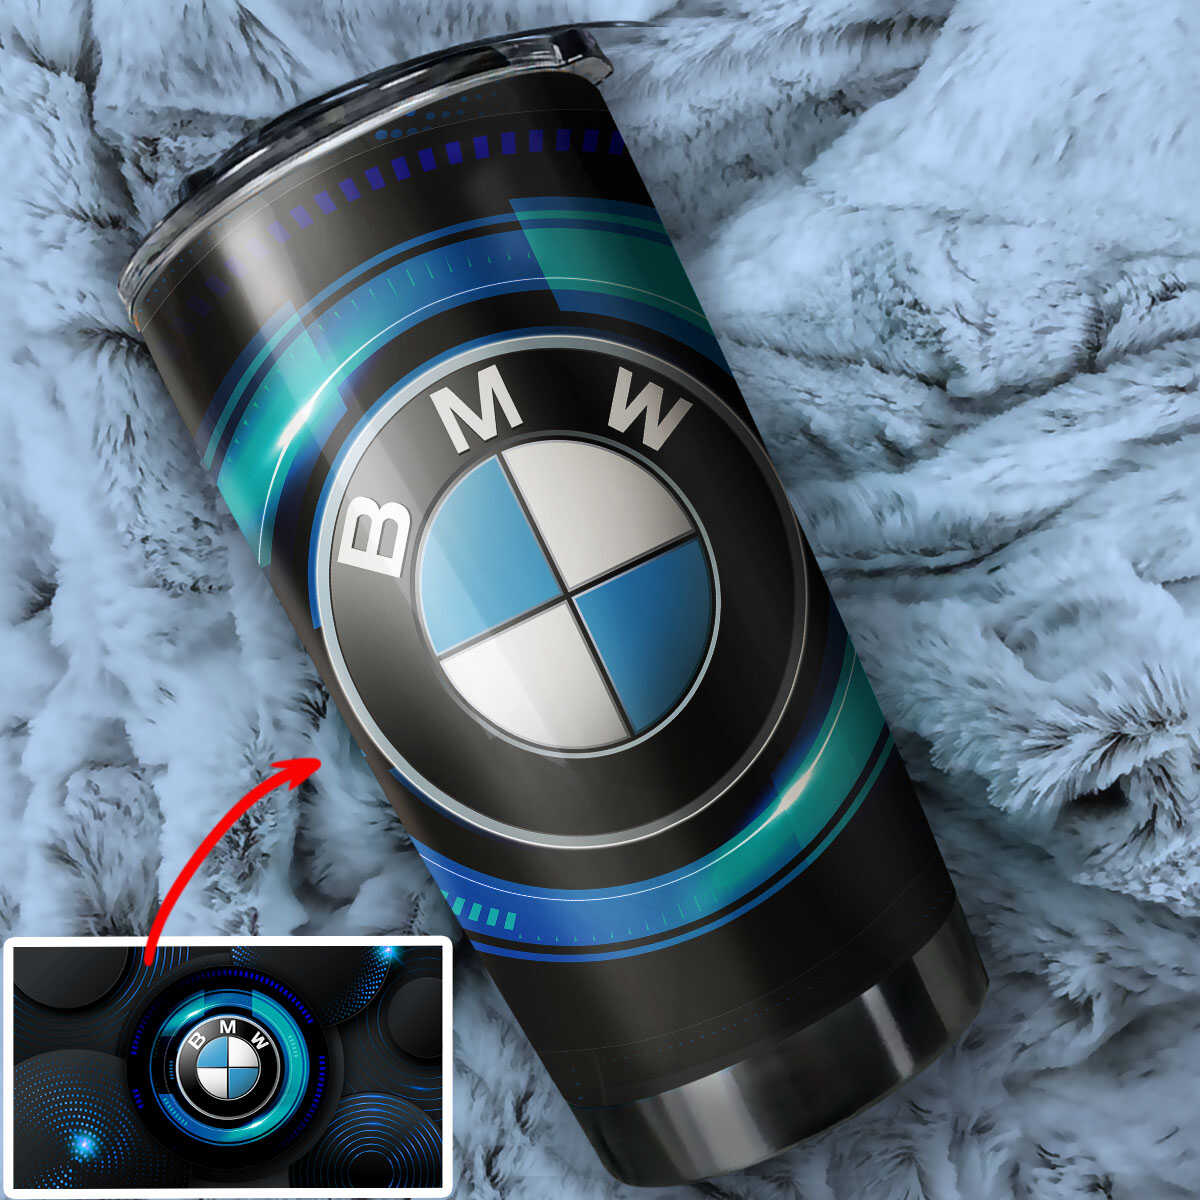 BMW Travel Mug